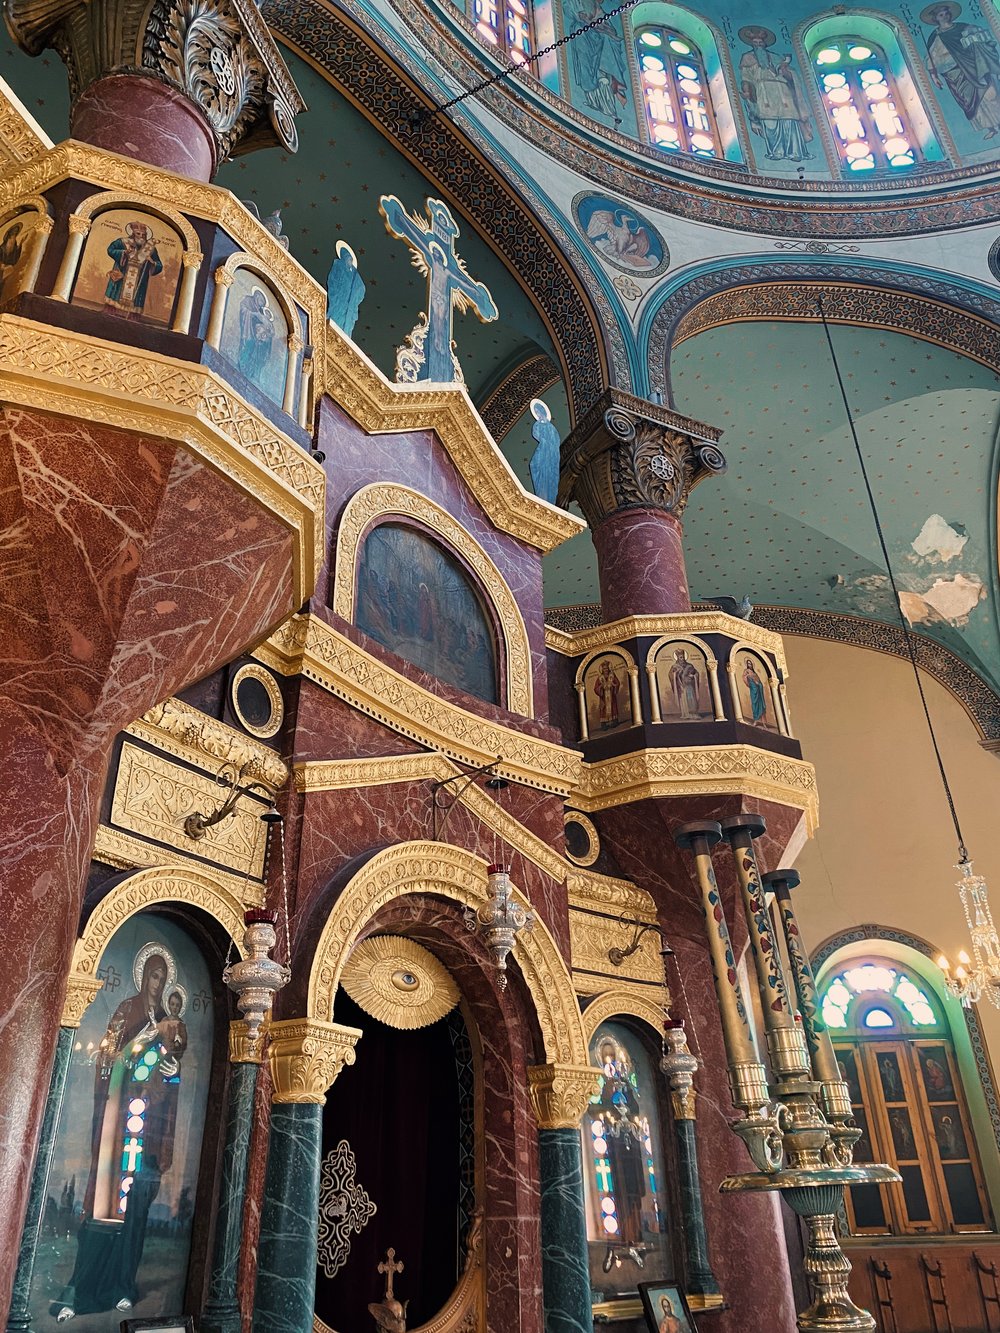 The Greek Orthodox Church's Interiors